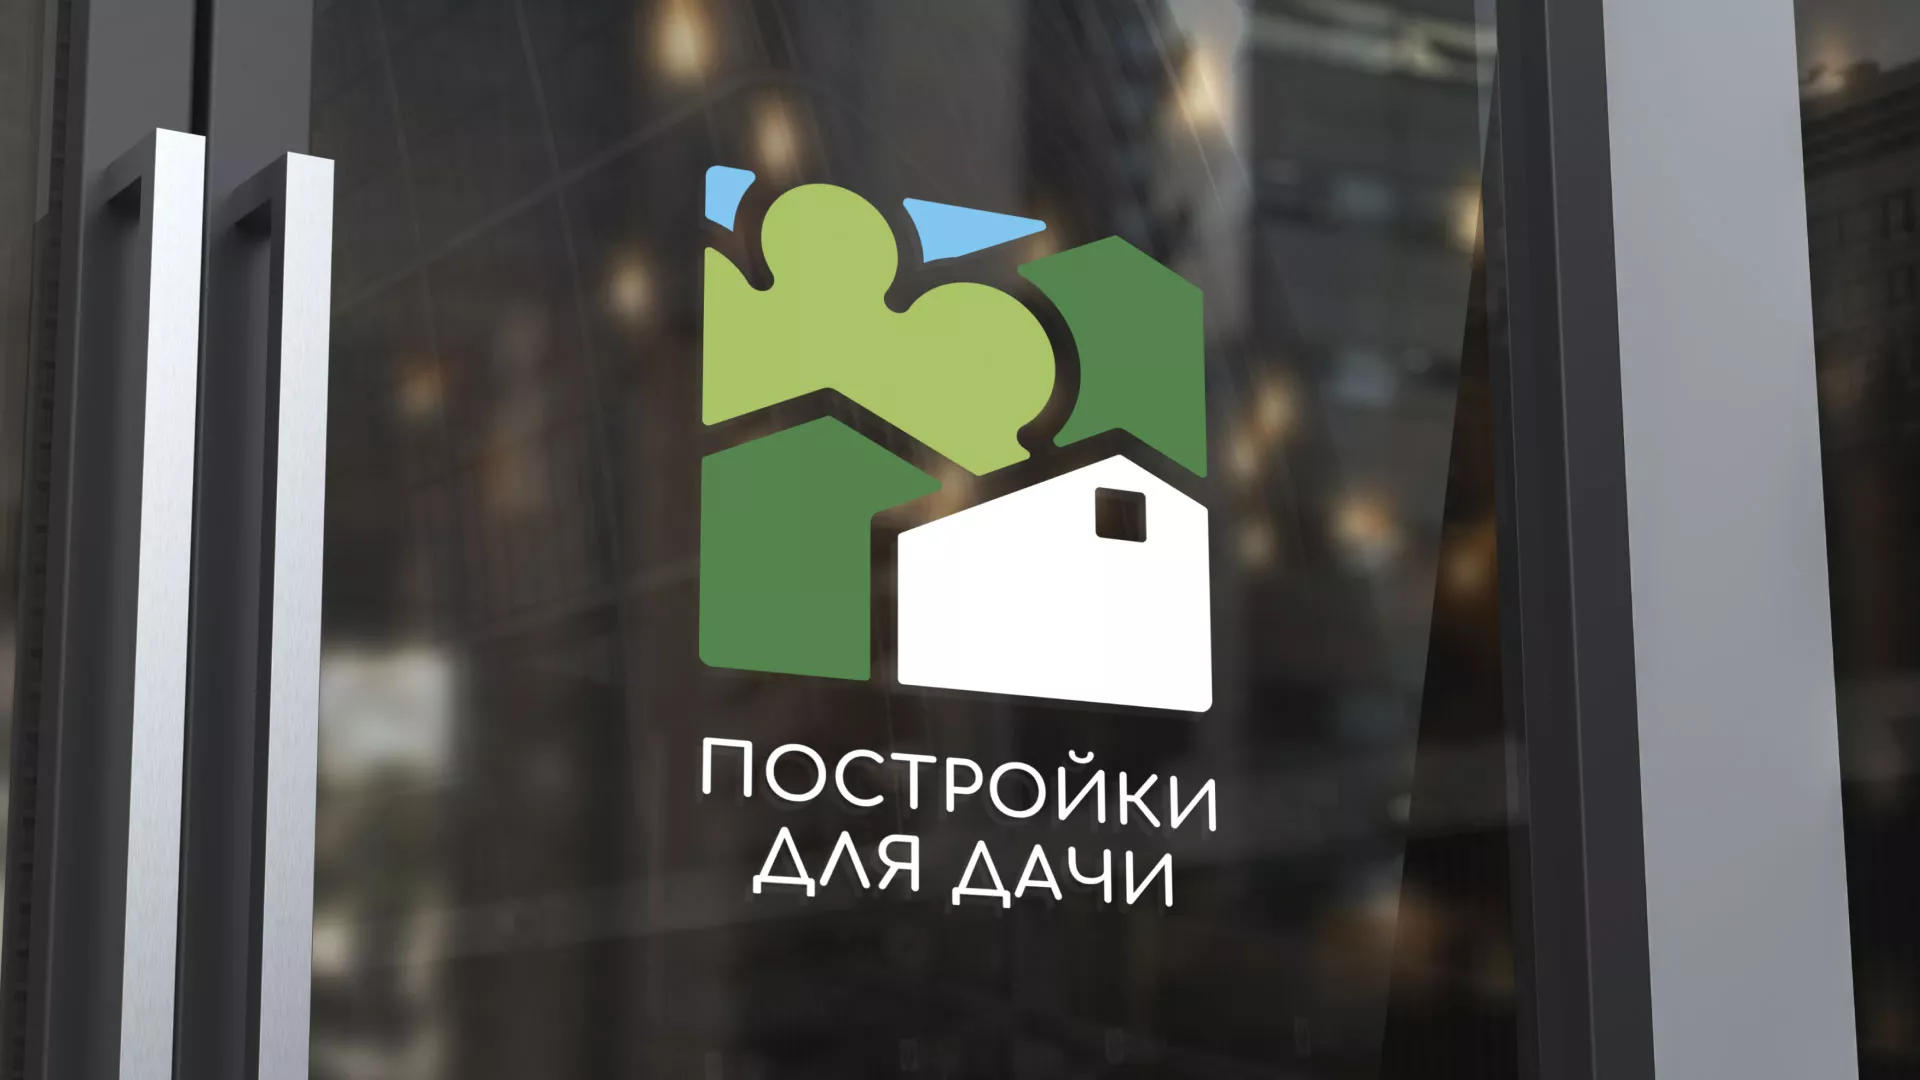 Разработка логотипа в Симе для компании «Постройки для дачи»